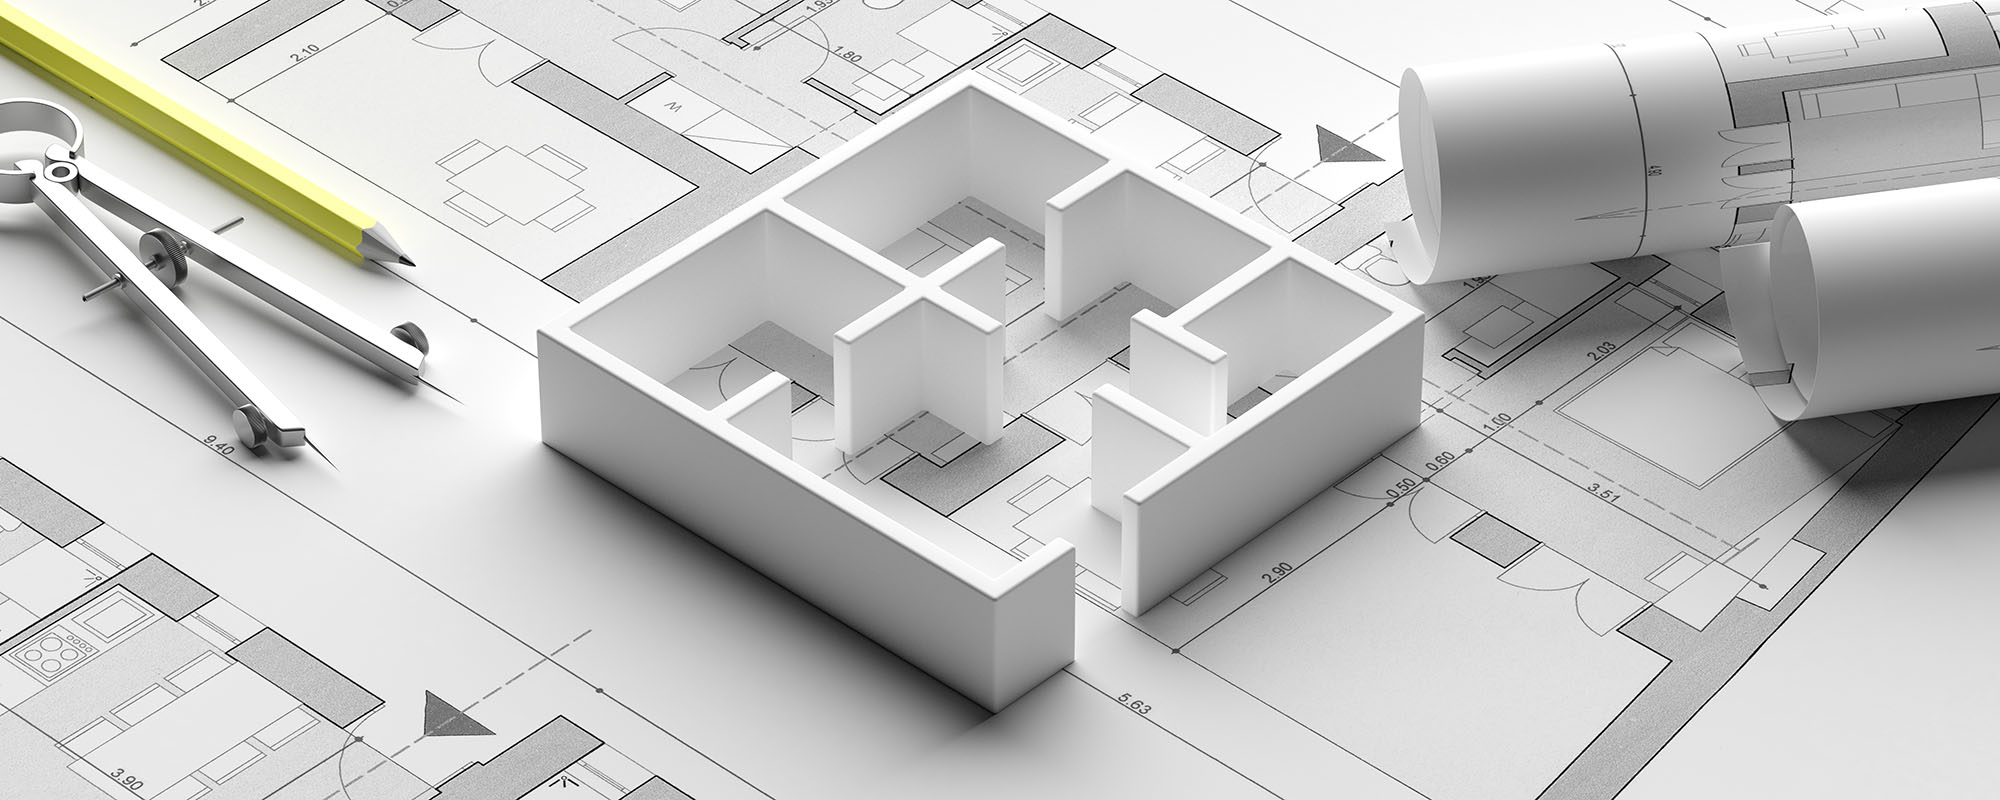 Building project blueprint plans and house model. Real estate, construction concept, banner. Architecture design. 3d illustration